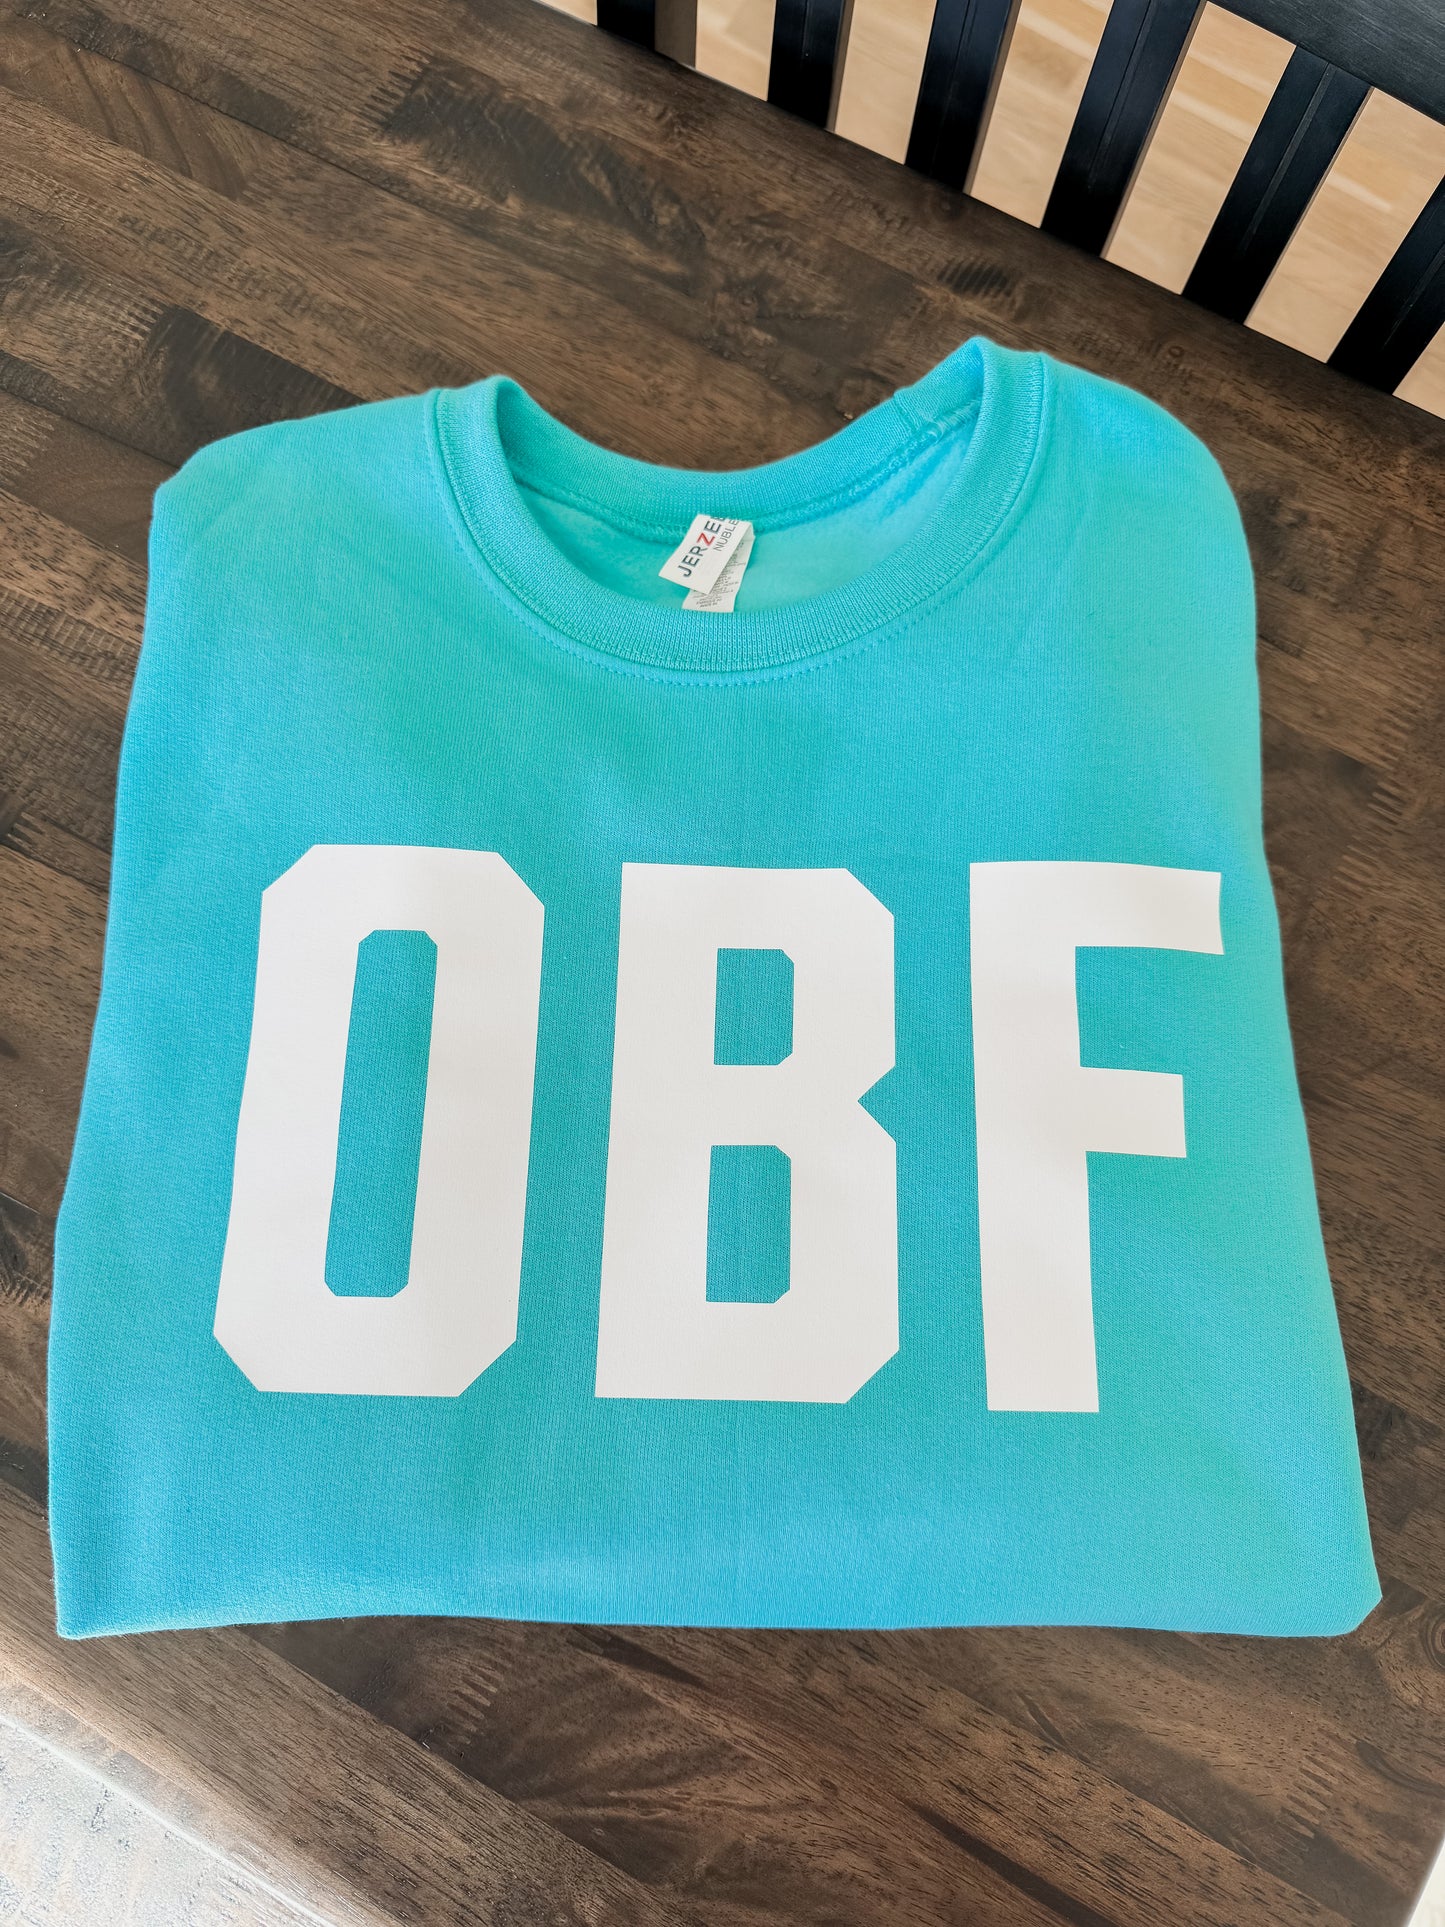 OBF- Blue crewneck